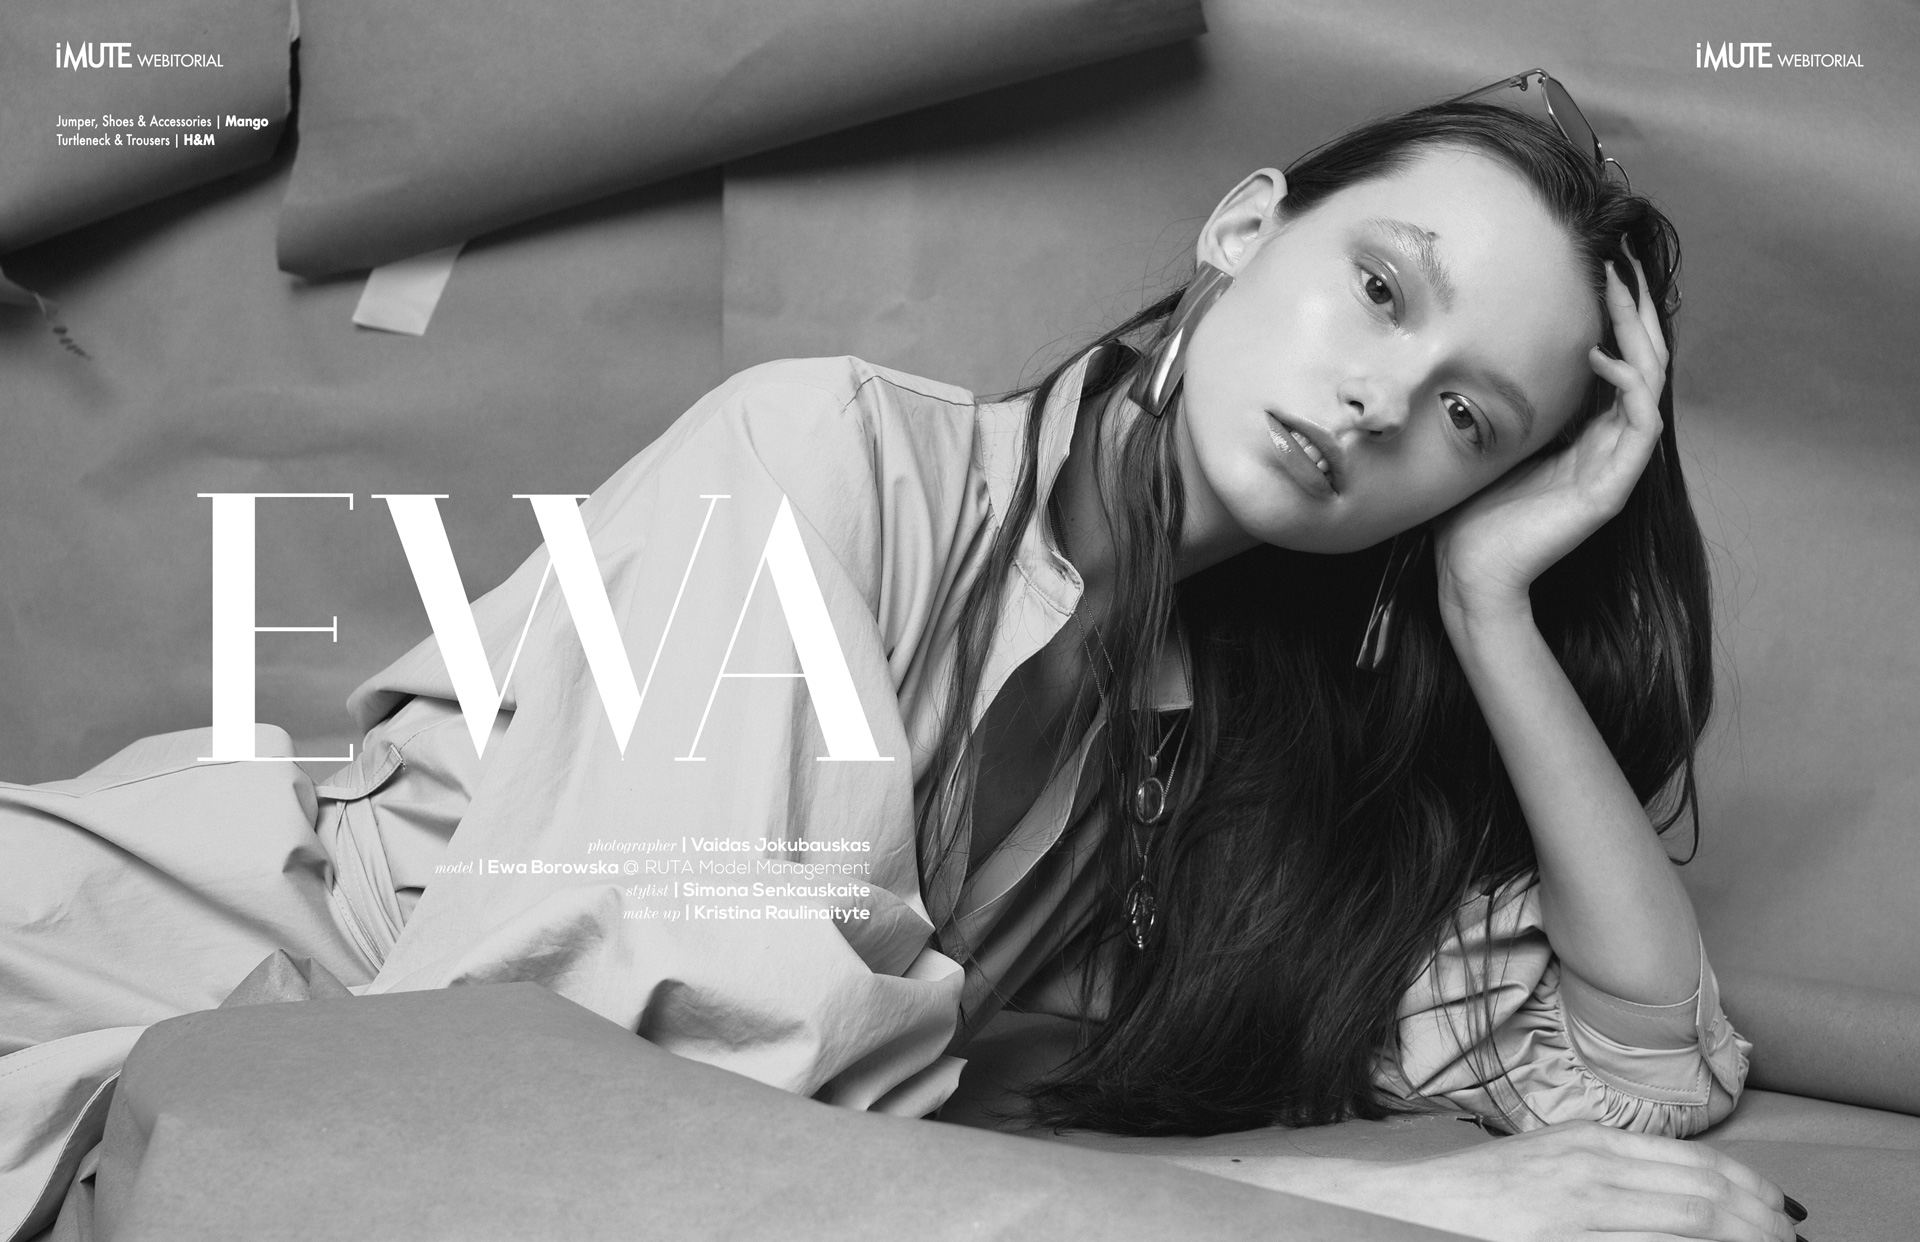 EWA webitorial for iMute Magazine Photographer | Vaidas Jokubauskas Model | Ewa Borowska @ Ruta Model Management Stylist | Simona Senkauskaite Makeup | Kristina Raulinaityte